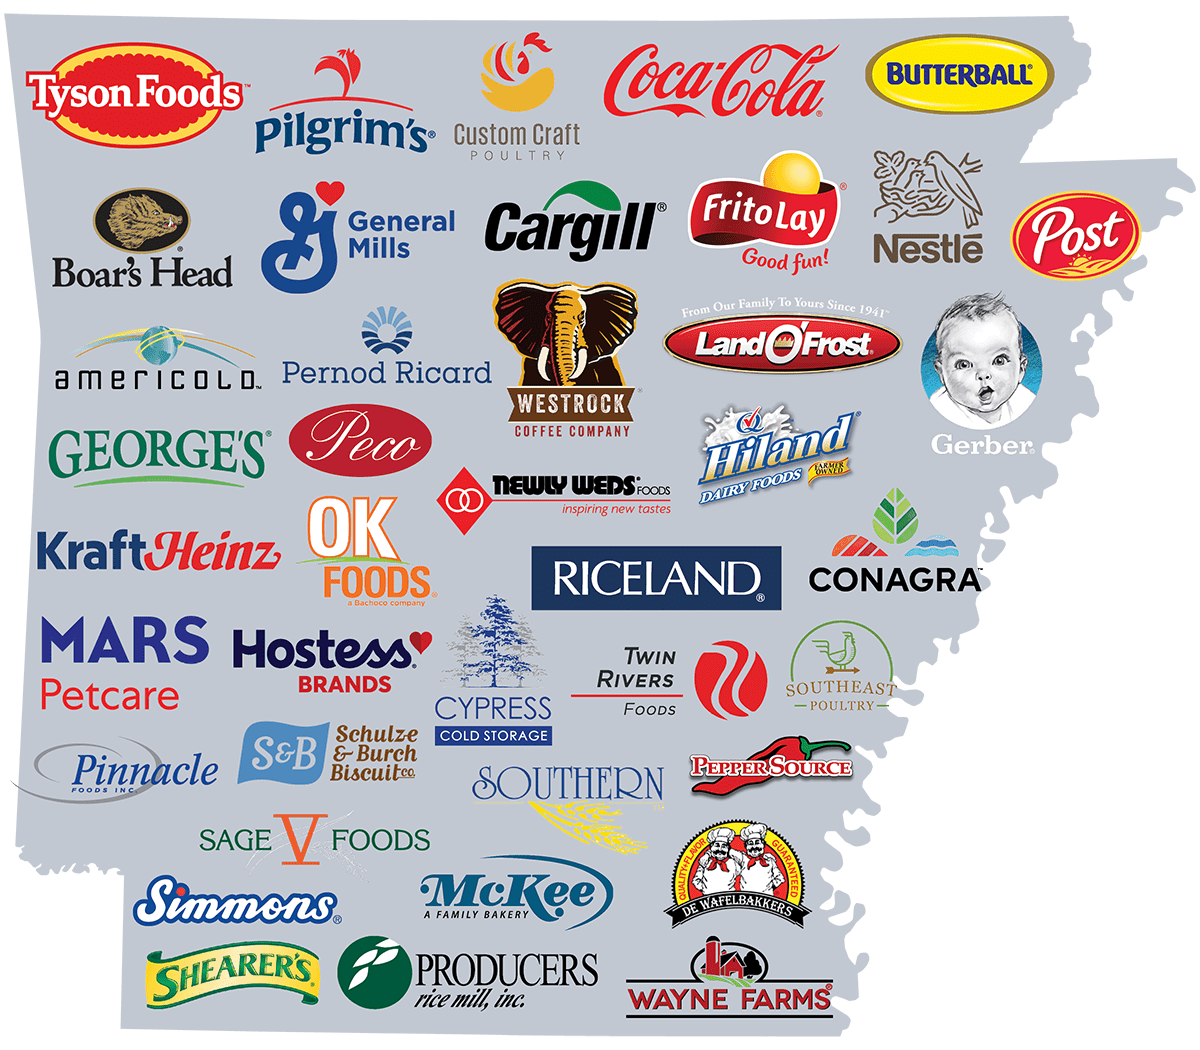 Food and Beverage Industry in Arkansas